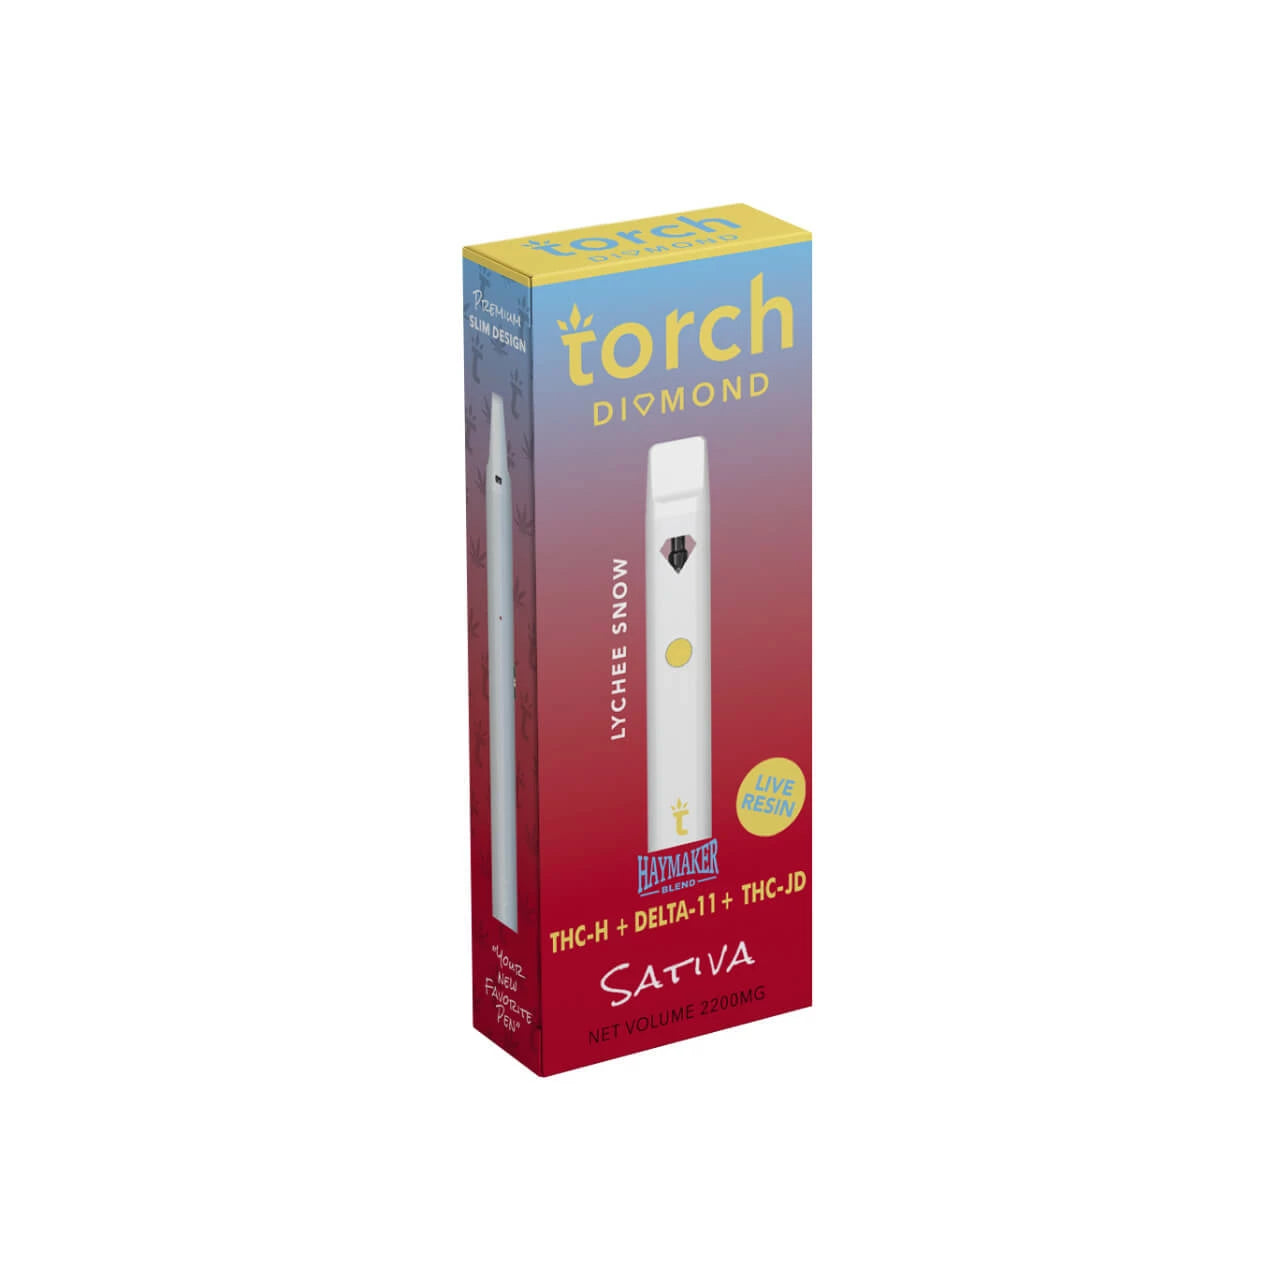 Torch Diamond Lychee Snow THC-h + Delta 11 + THC-jd Disposable (2.2g) Best Sales Price - Vape Pens